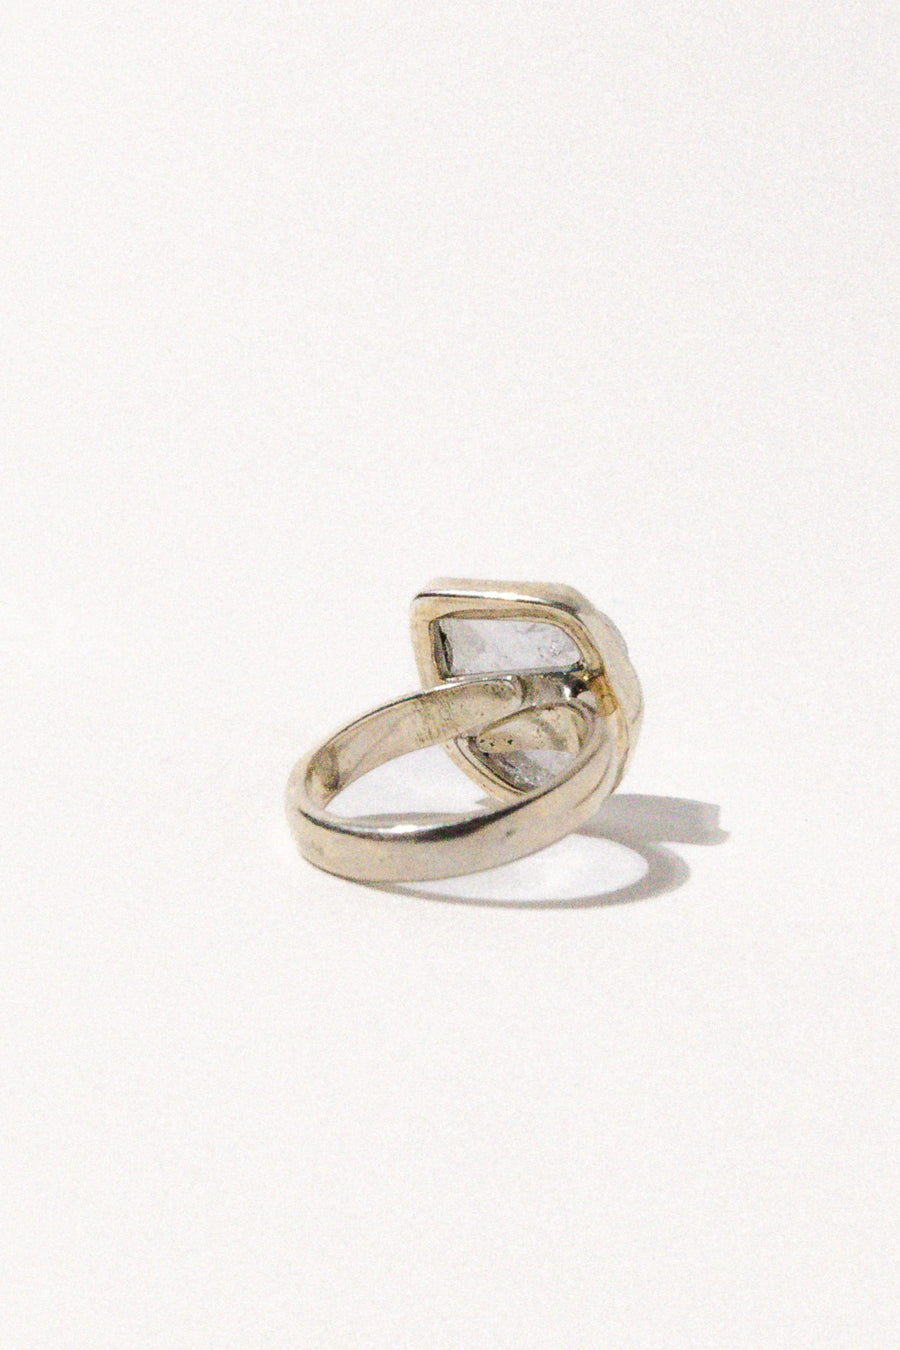 Goddess Jewelry Attunement Herkimer Quartz Ring